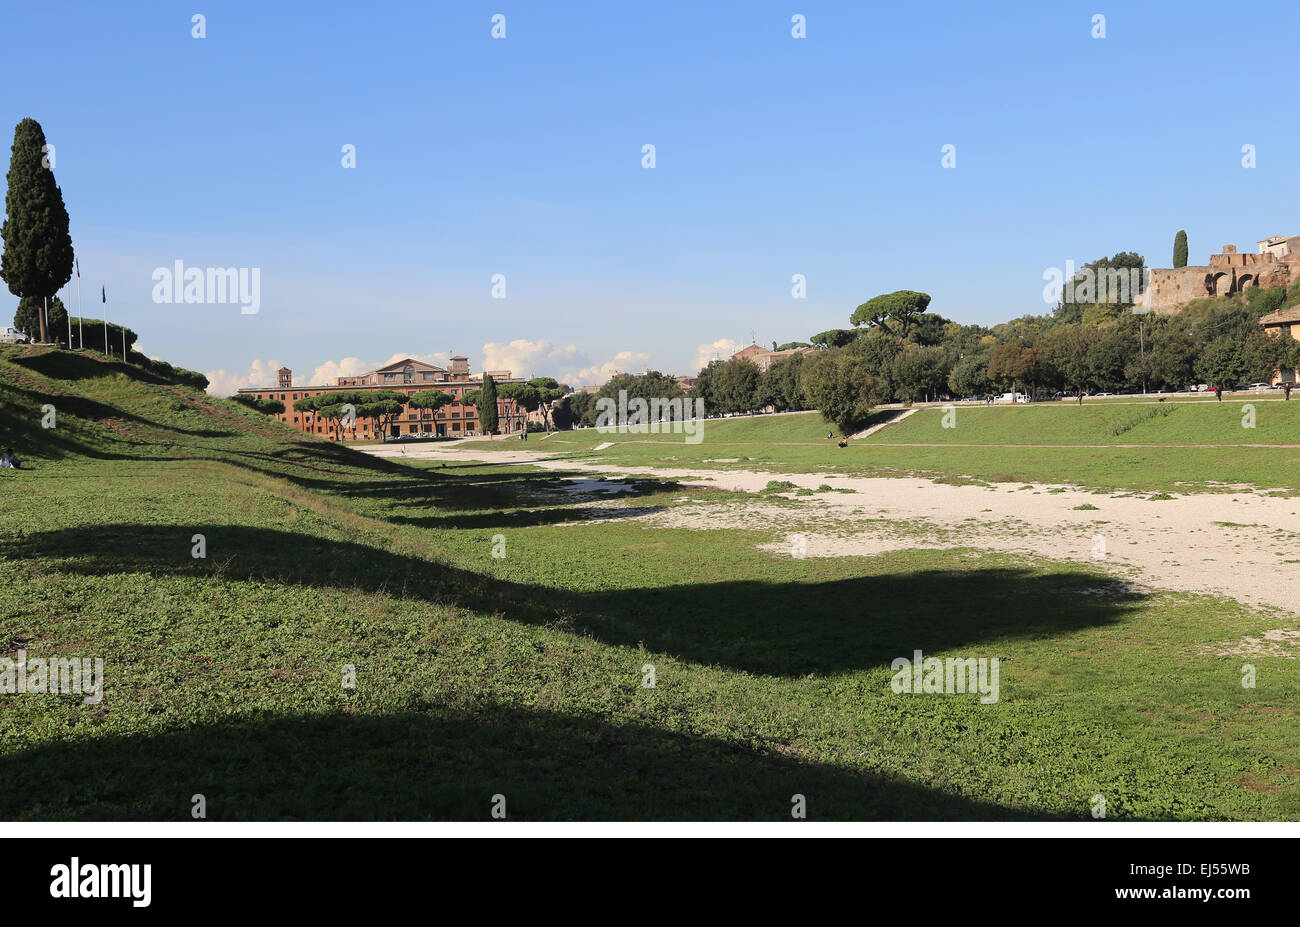 Italy. Rome. Circus Maximus. Ancient Roman chariot racing stadium. View. Ruins. Stock Photo